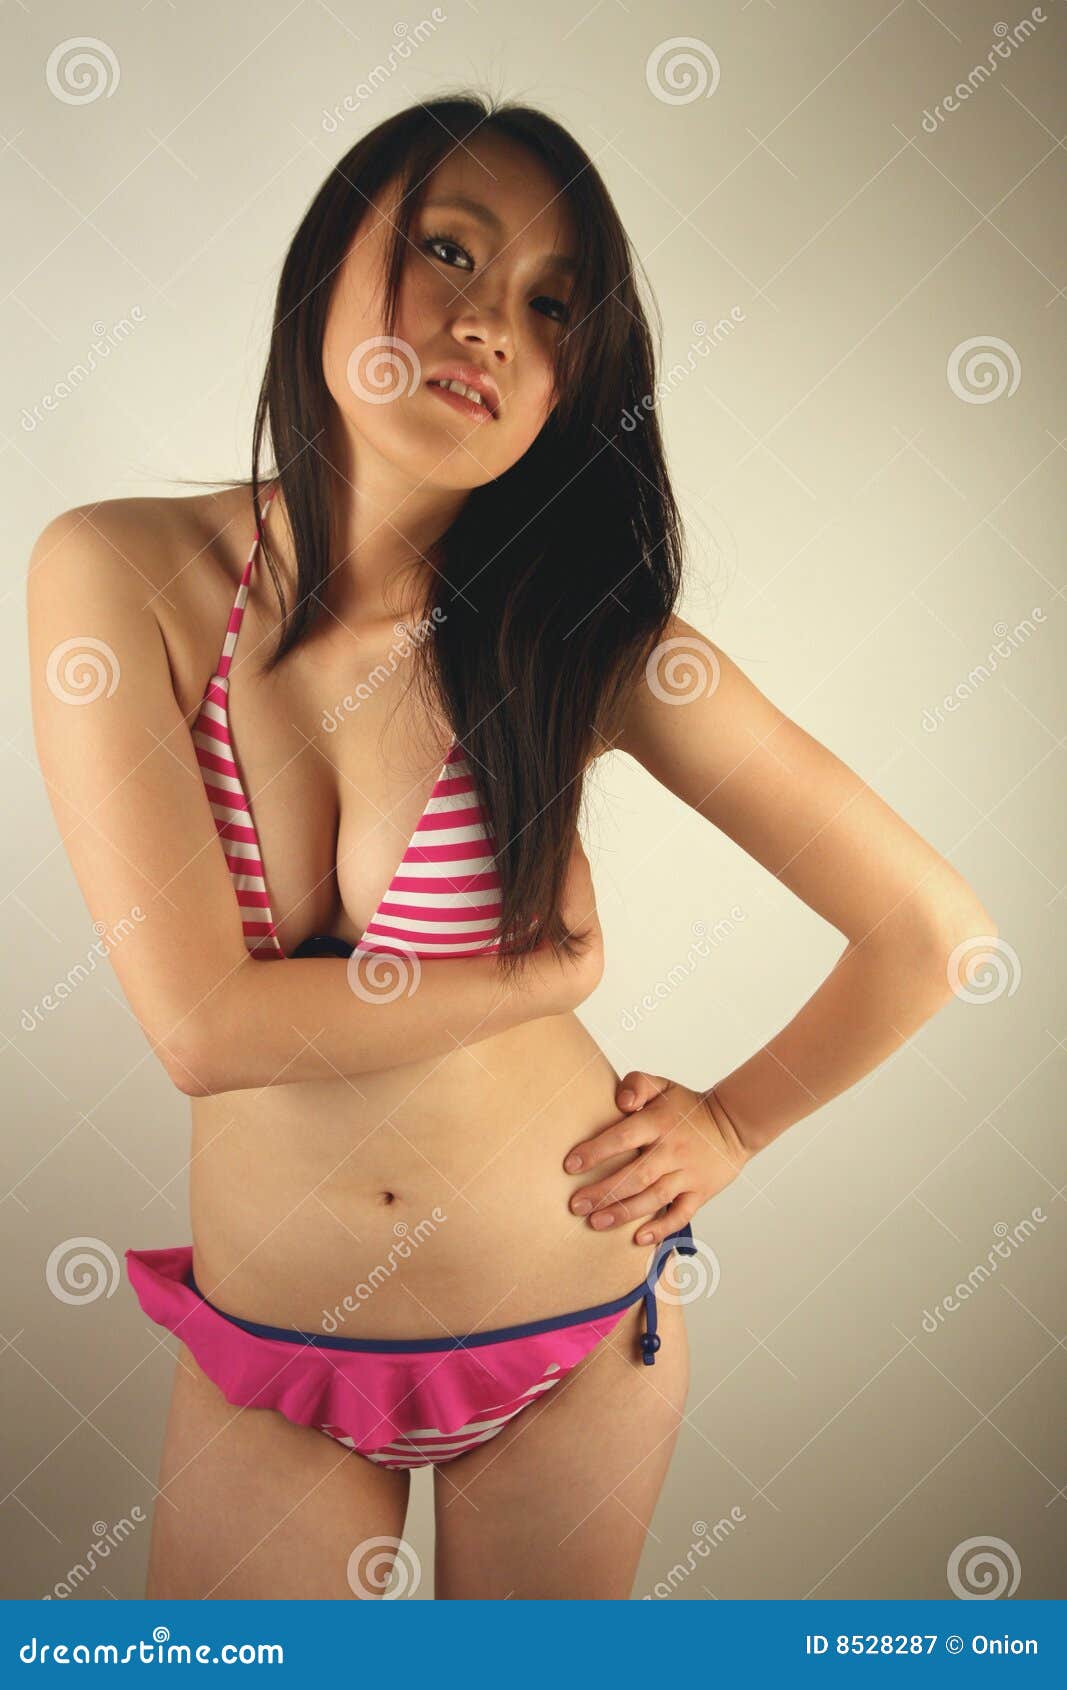 Exotic Asian Babes - Exotic asian babes - Naked photo